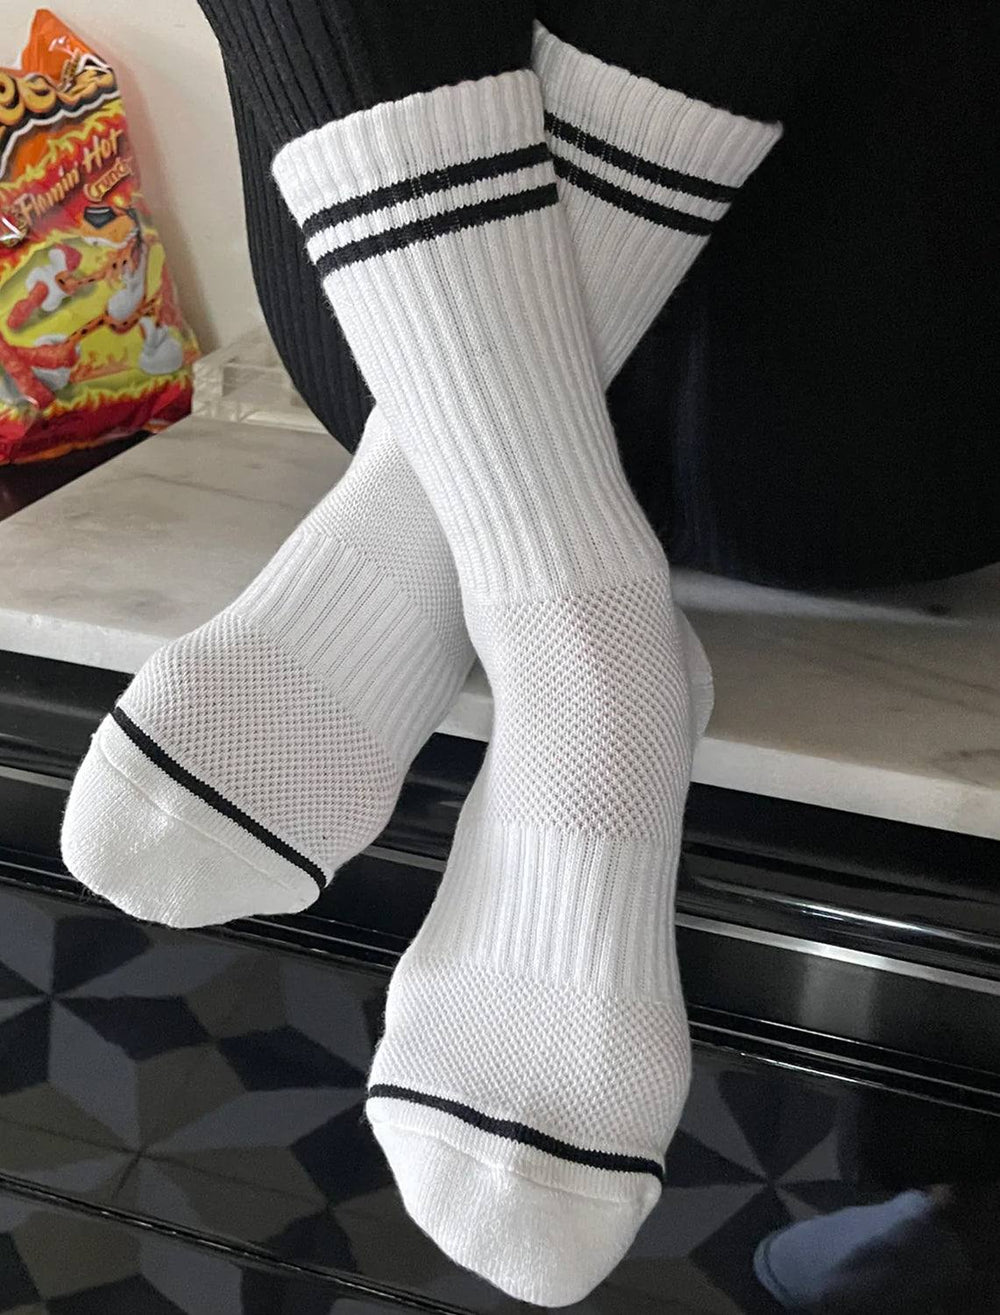 Le Bon Shoppe's boyfriend socks in classic white.